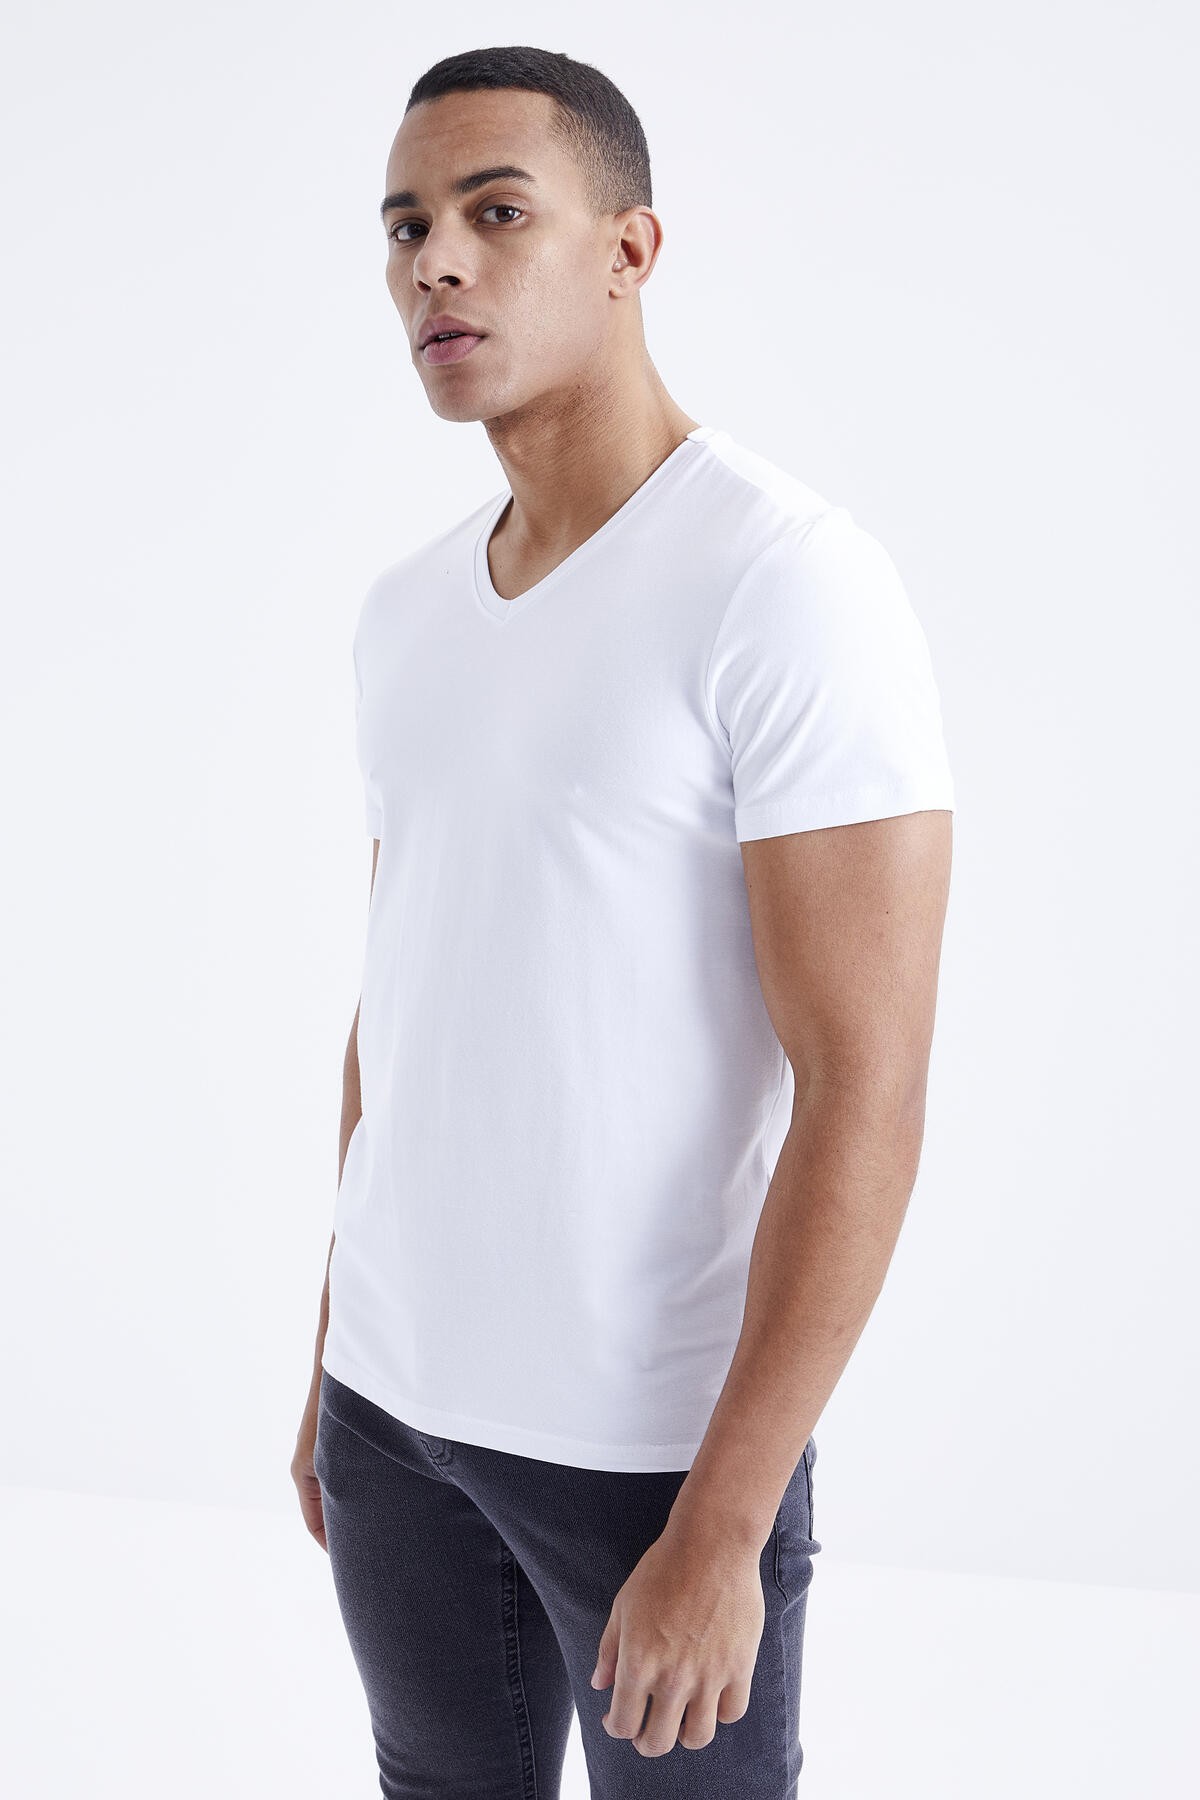 TommyLife - Beyaz Basic Kısa Kol Standart Kalıp V Yaka Erkek T-Shirt - 87912